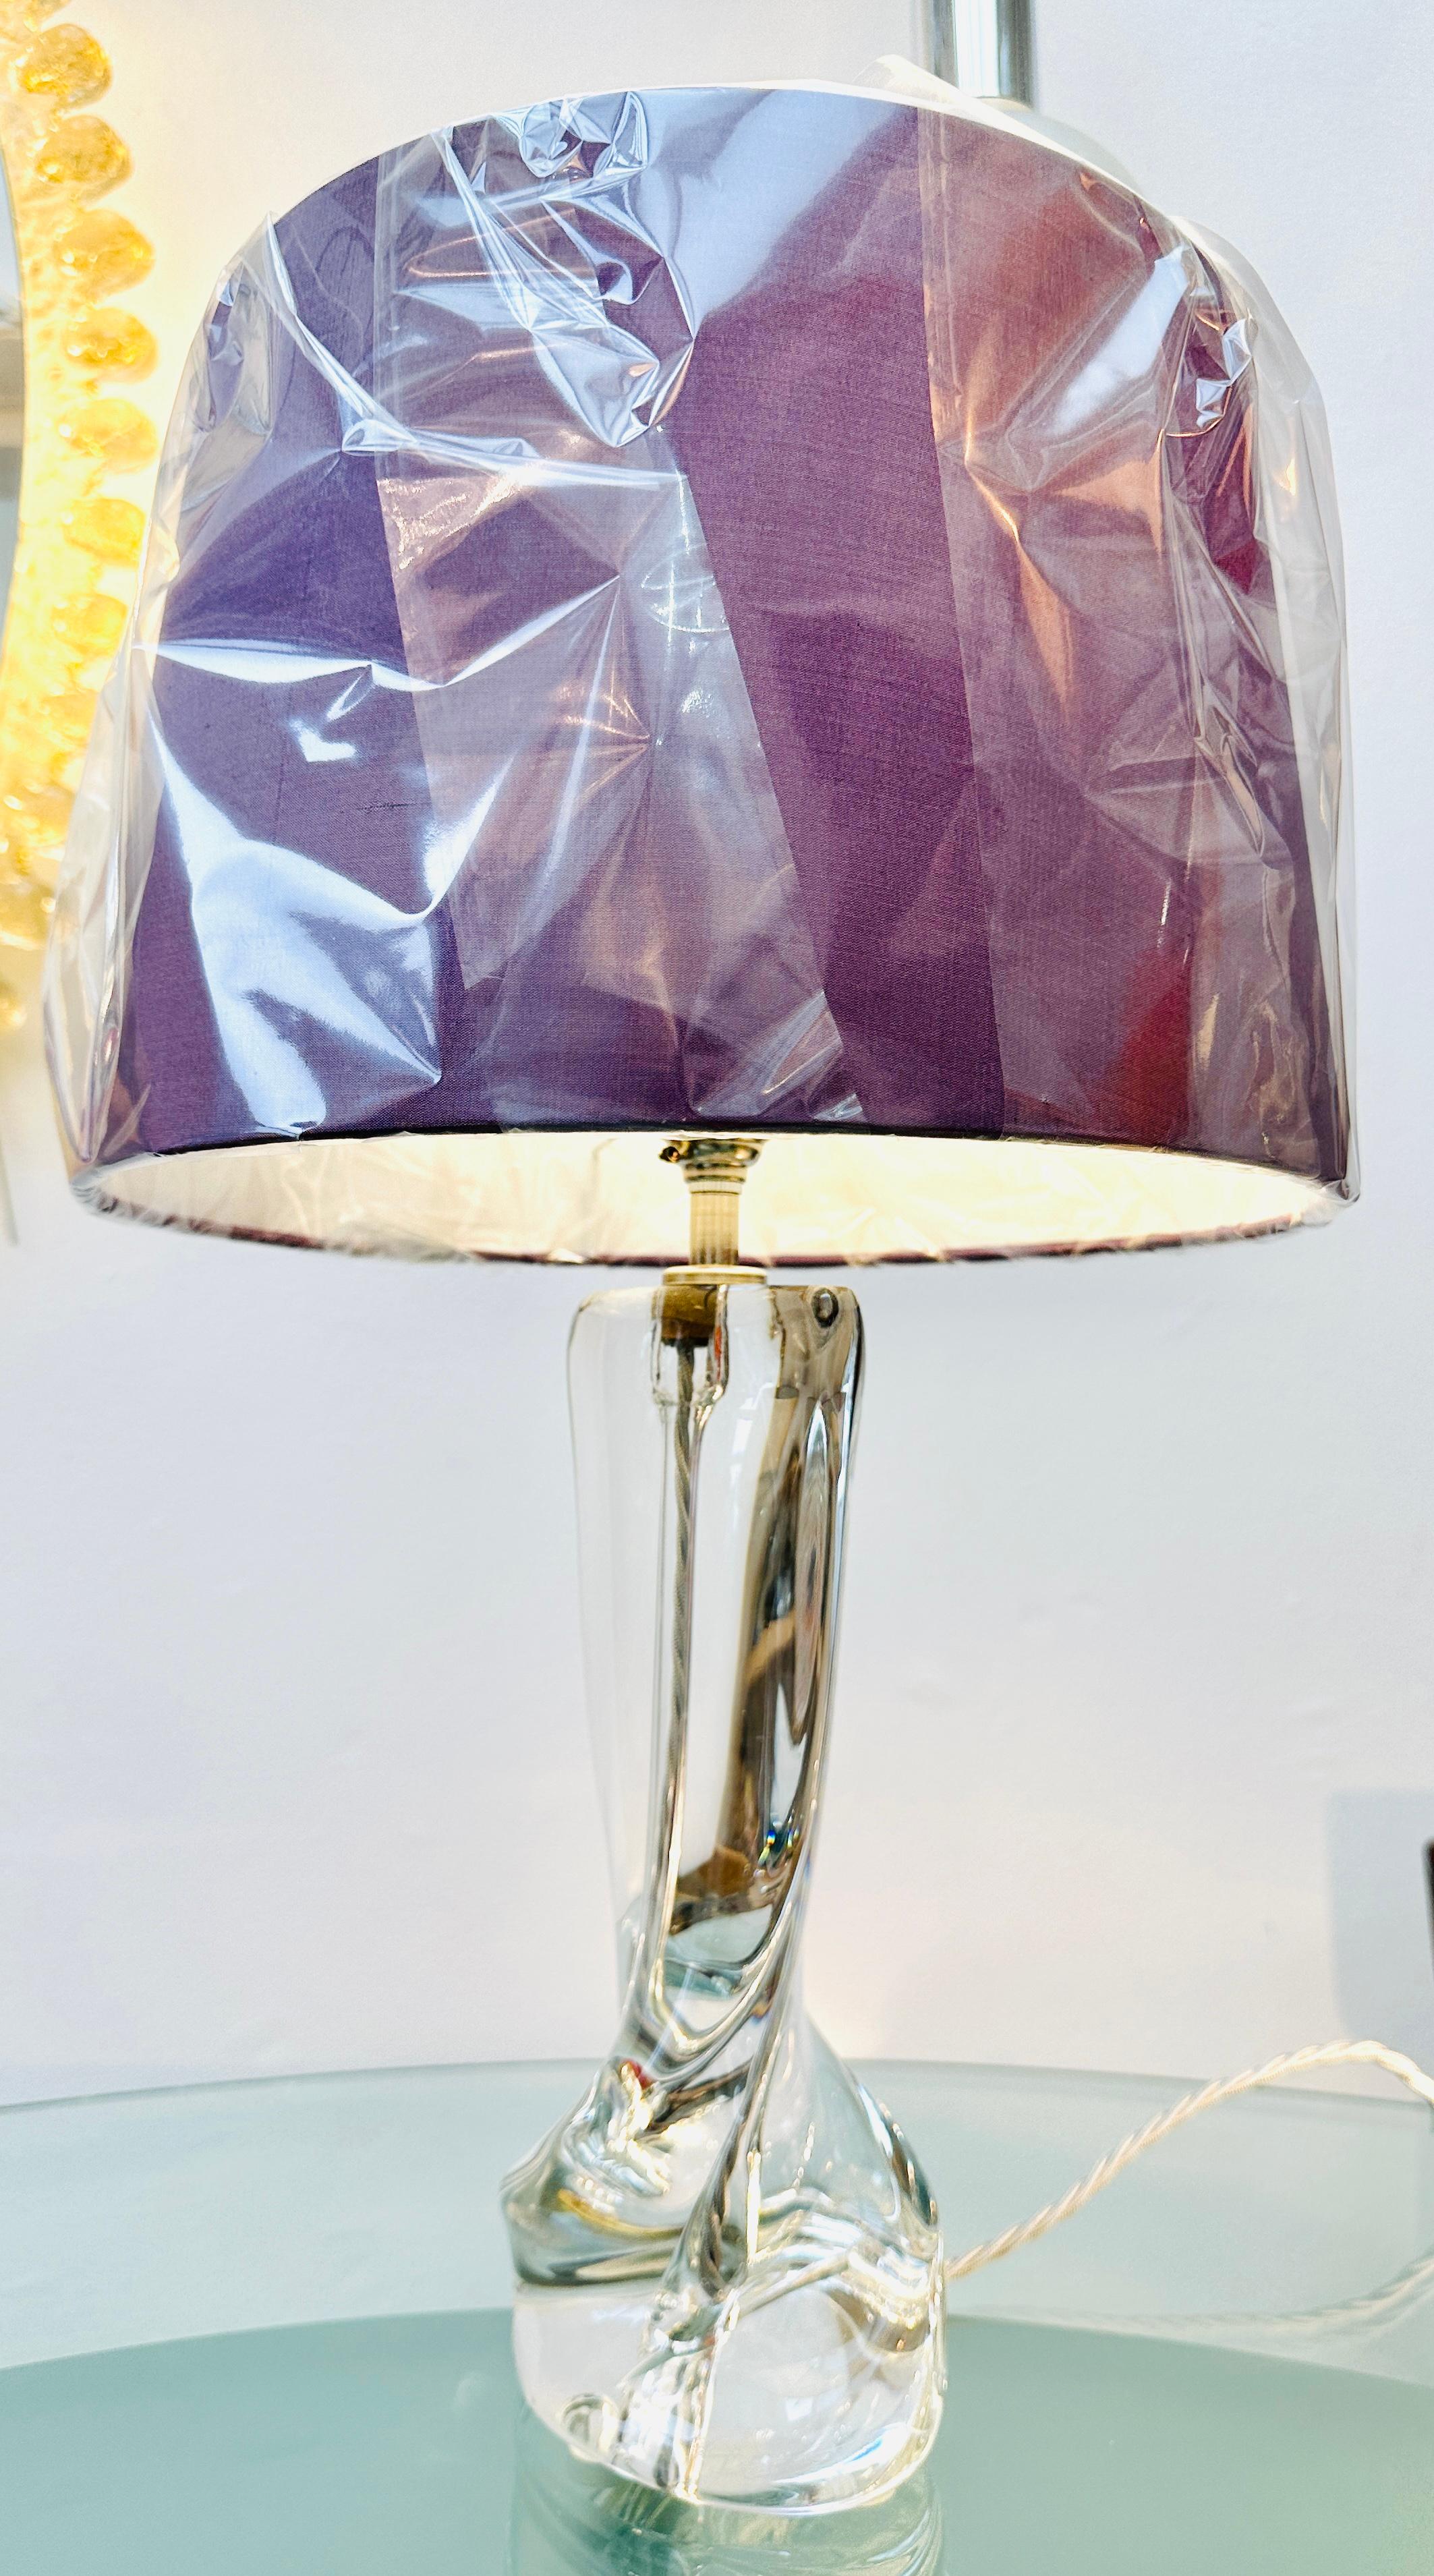 1950s Modernist French Cristalleries De Sèvre Crystal Glass & Chrome Table Lamp For Sale 1